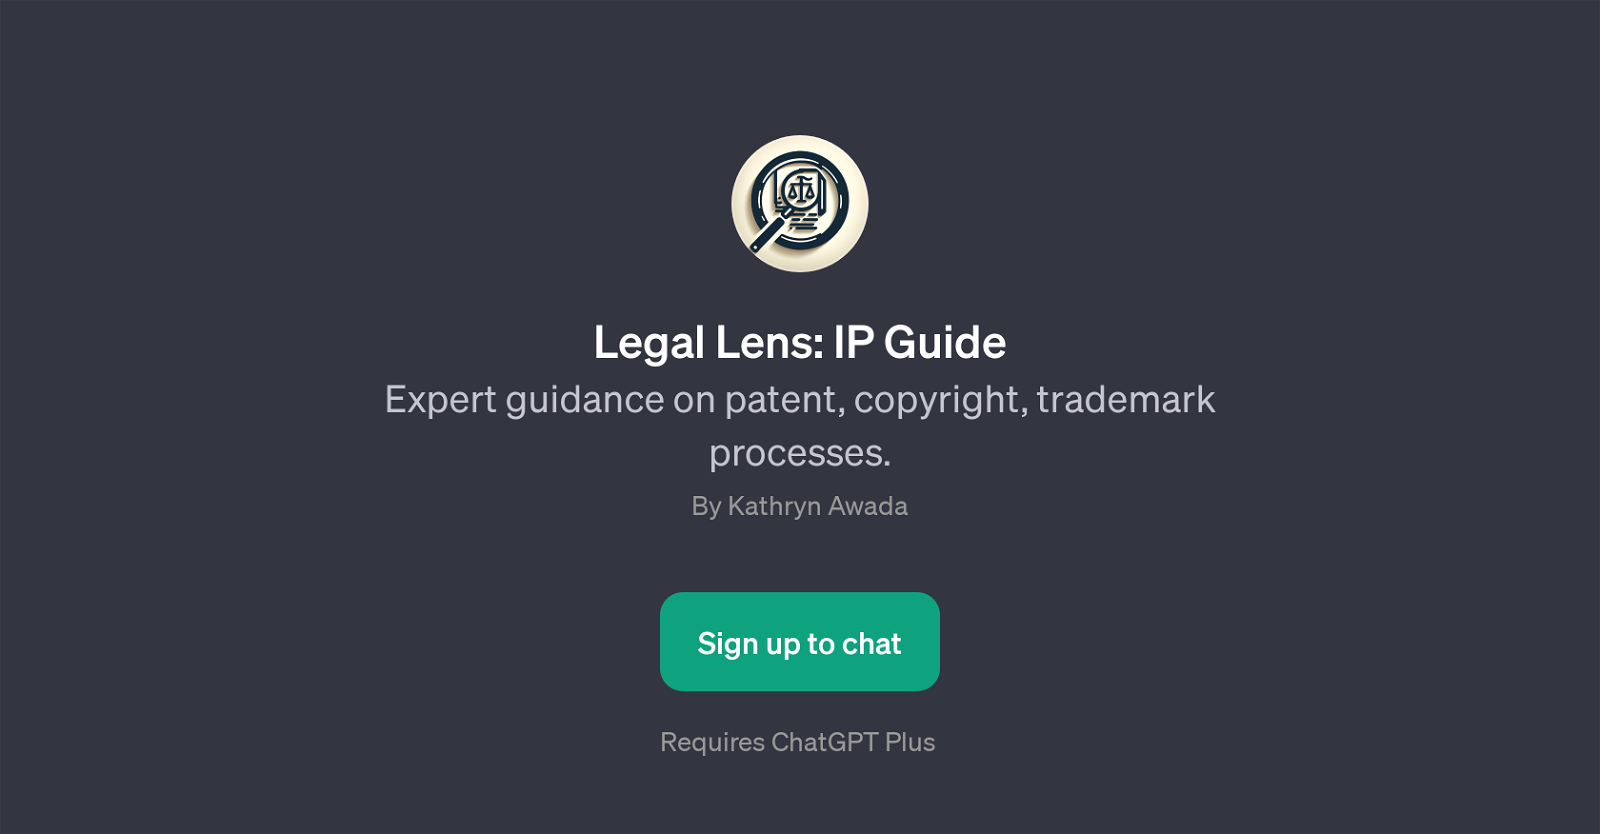 Legal Lens: IP Guide website